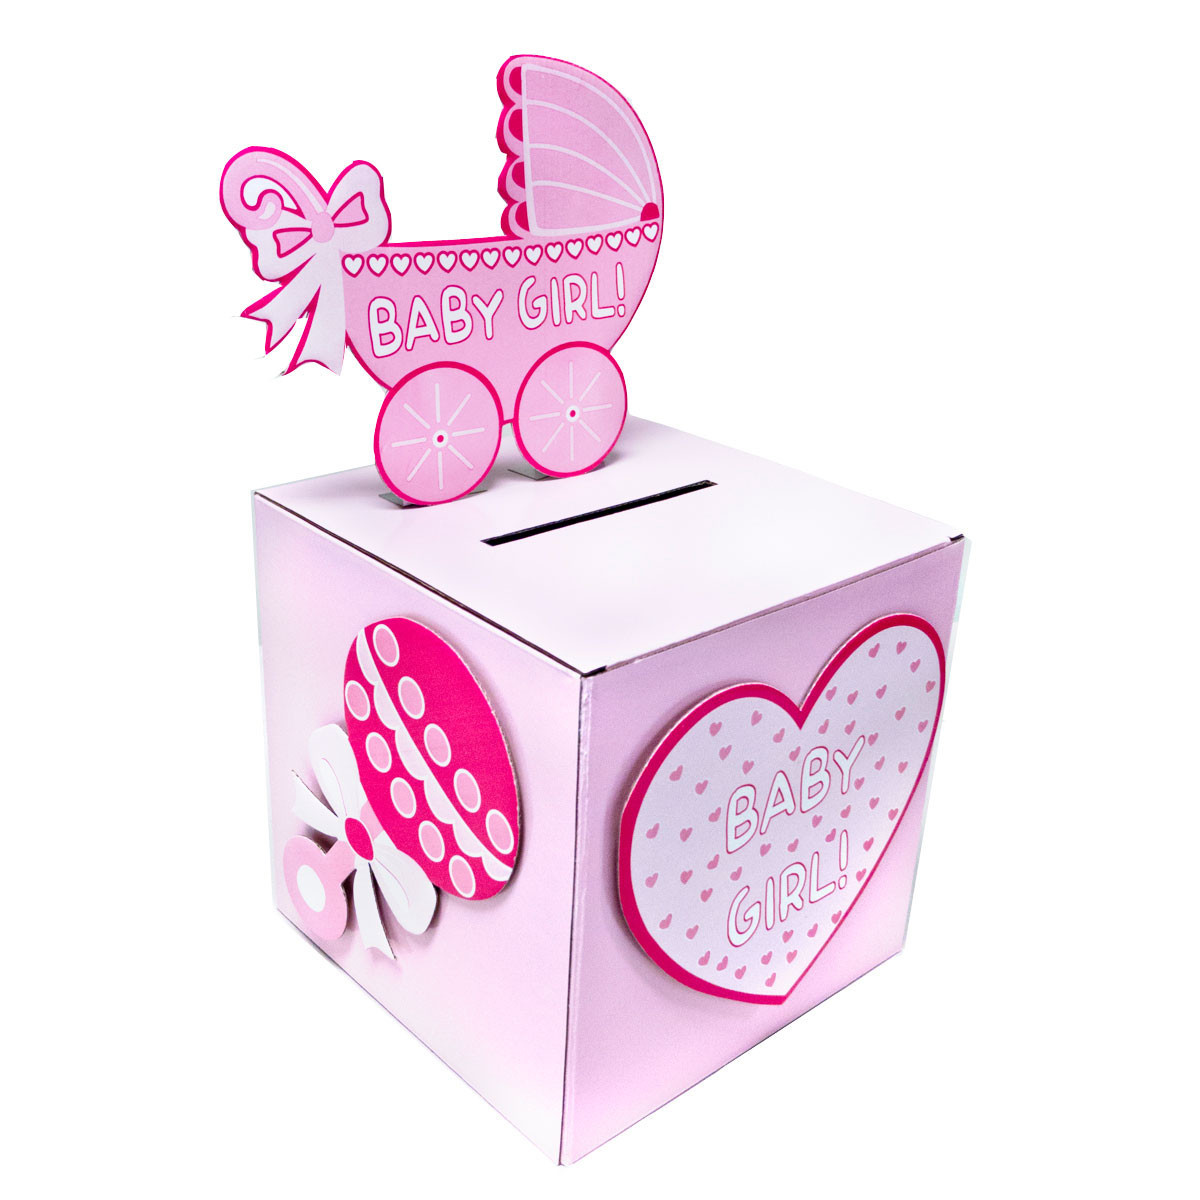 Baby Shower Wishing Well Gift Ideas
 Baby Shower Wishing Well Card Box Decoration Keepsake